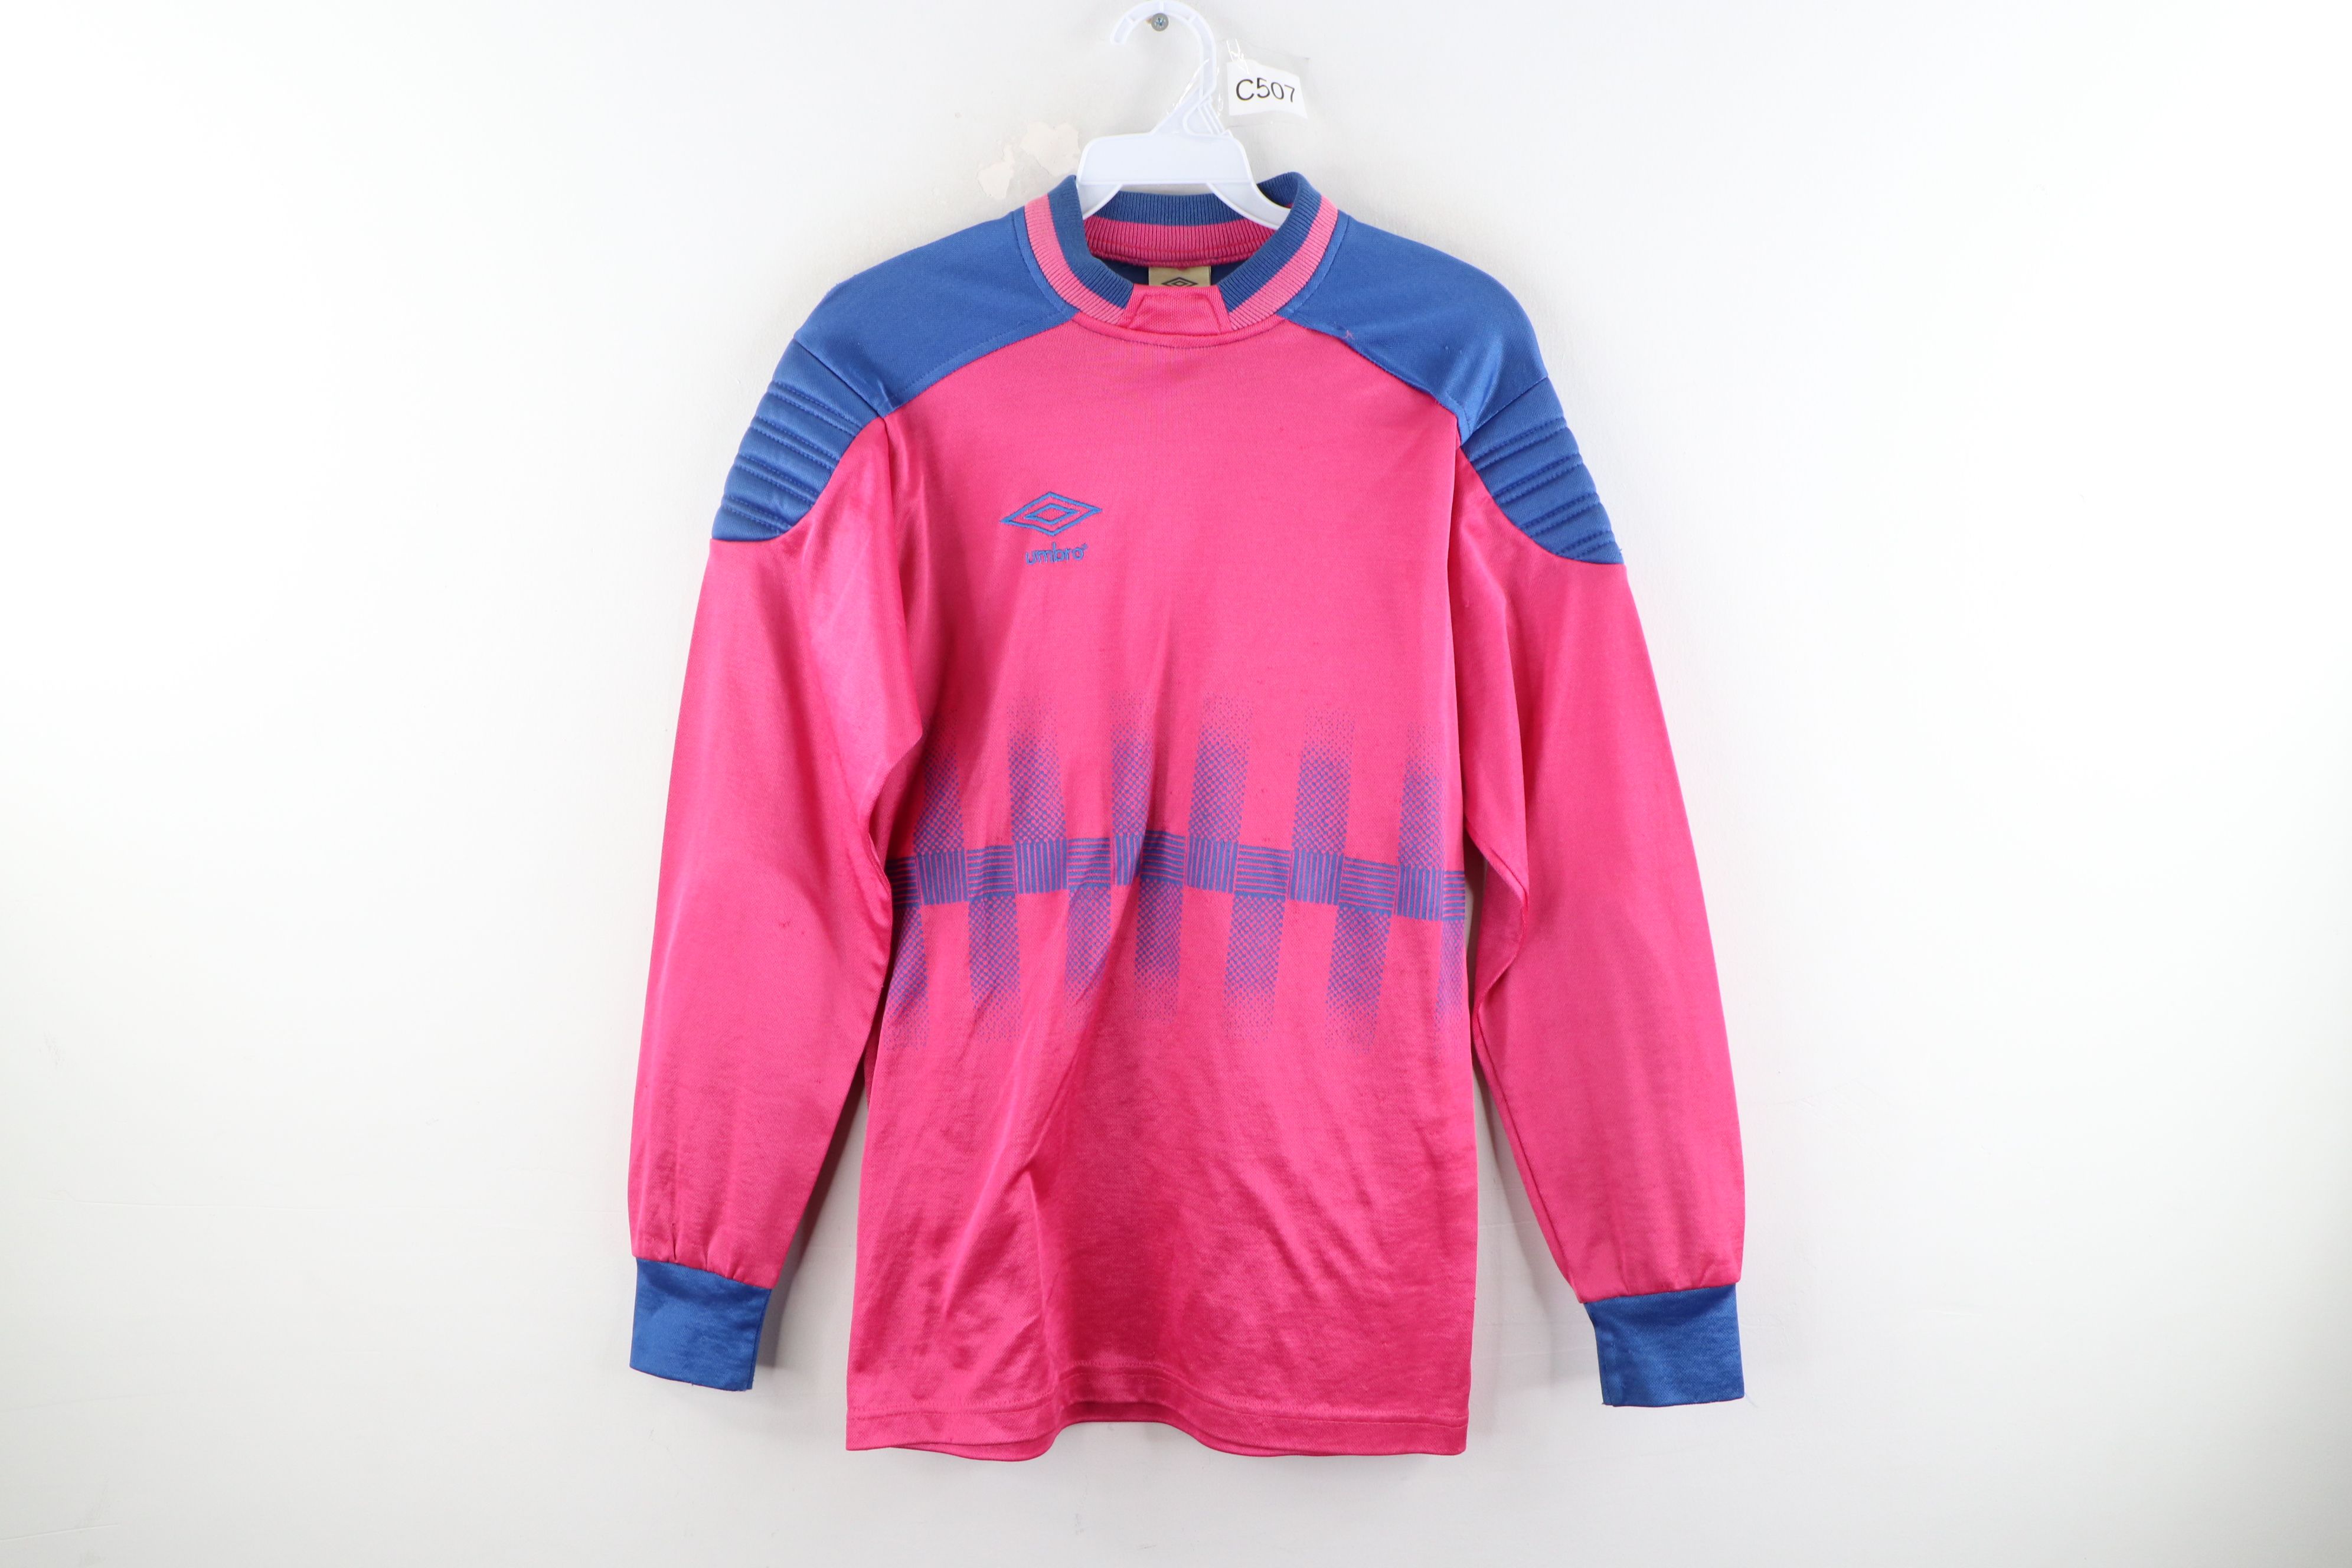 Vintage Vintage 90s Umbro Distressed Padded Goalie Jersey Pink USA Size US S / EU 44-46 / 1 - 1 Preview